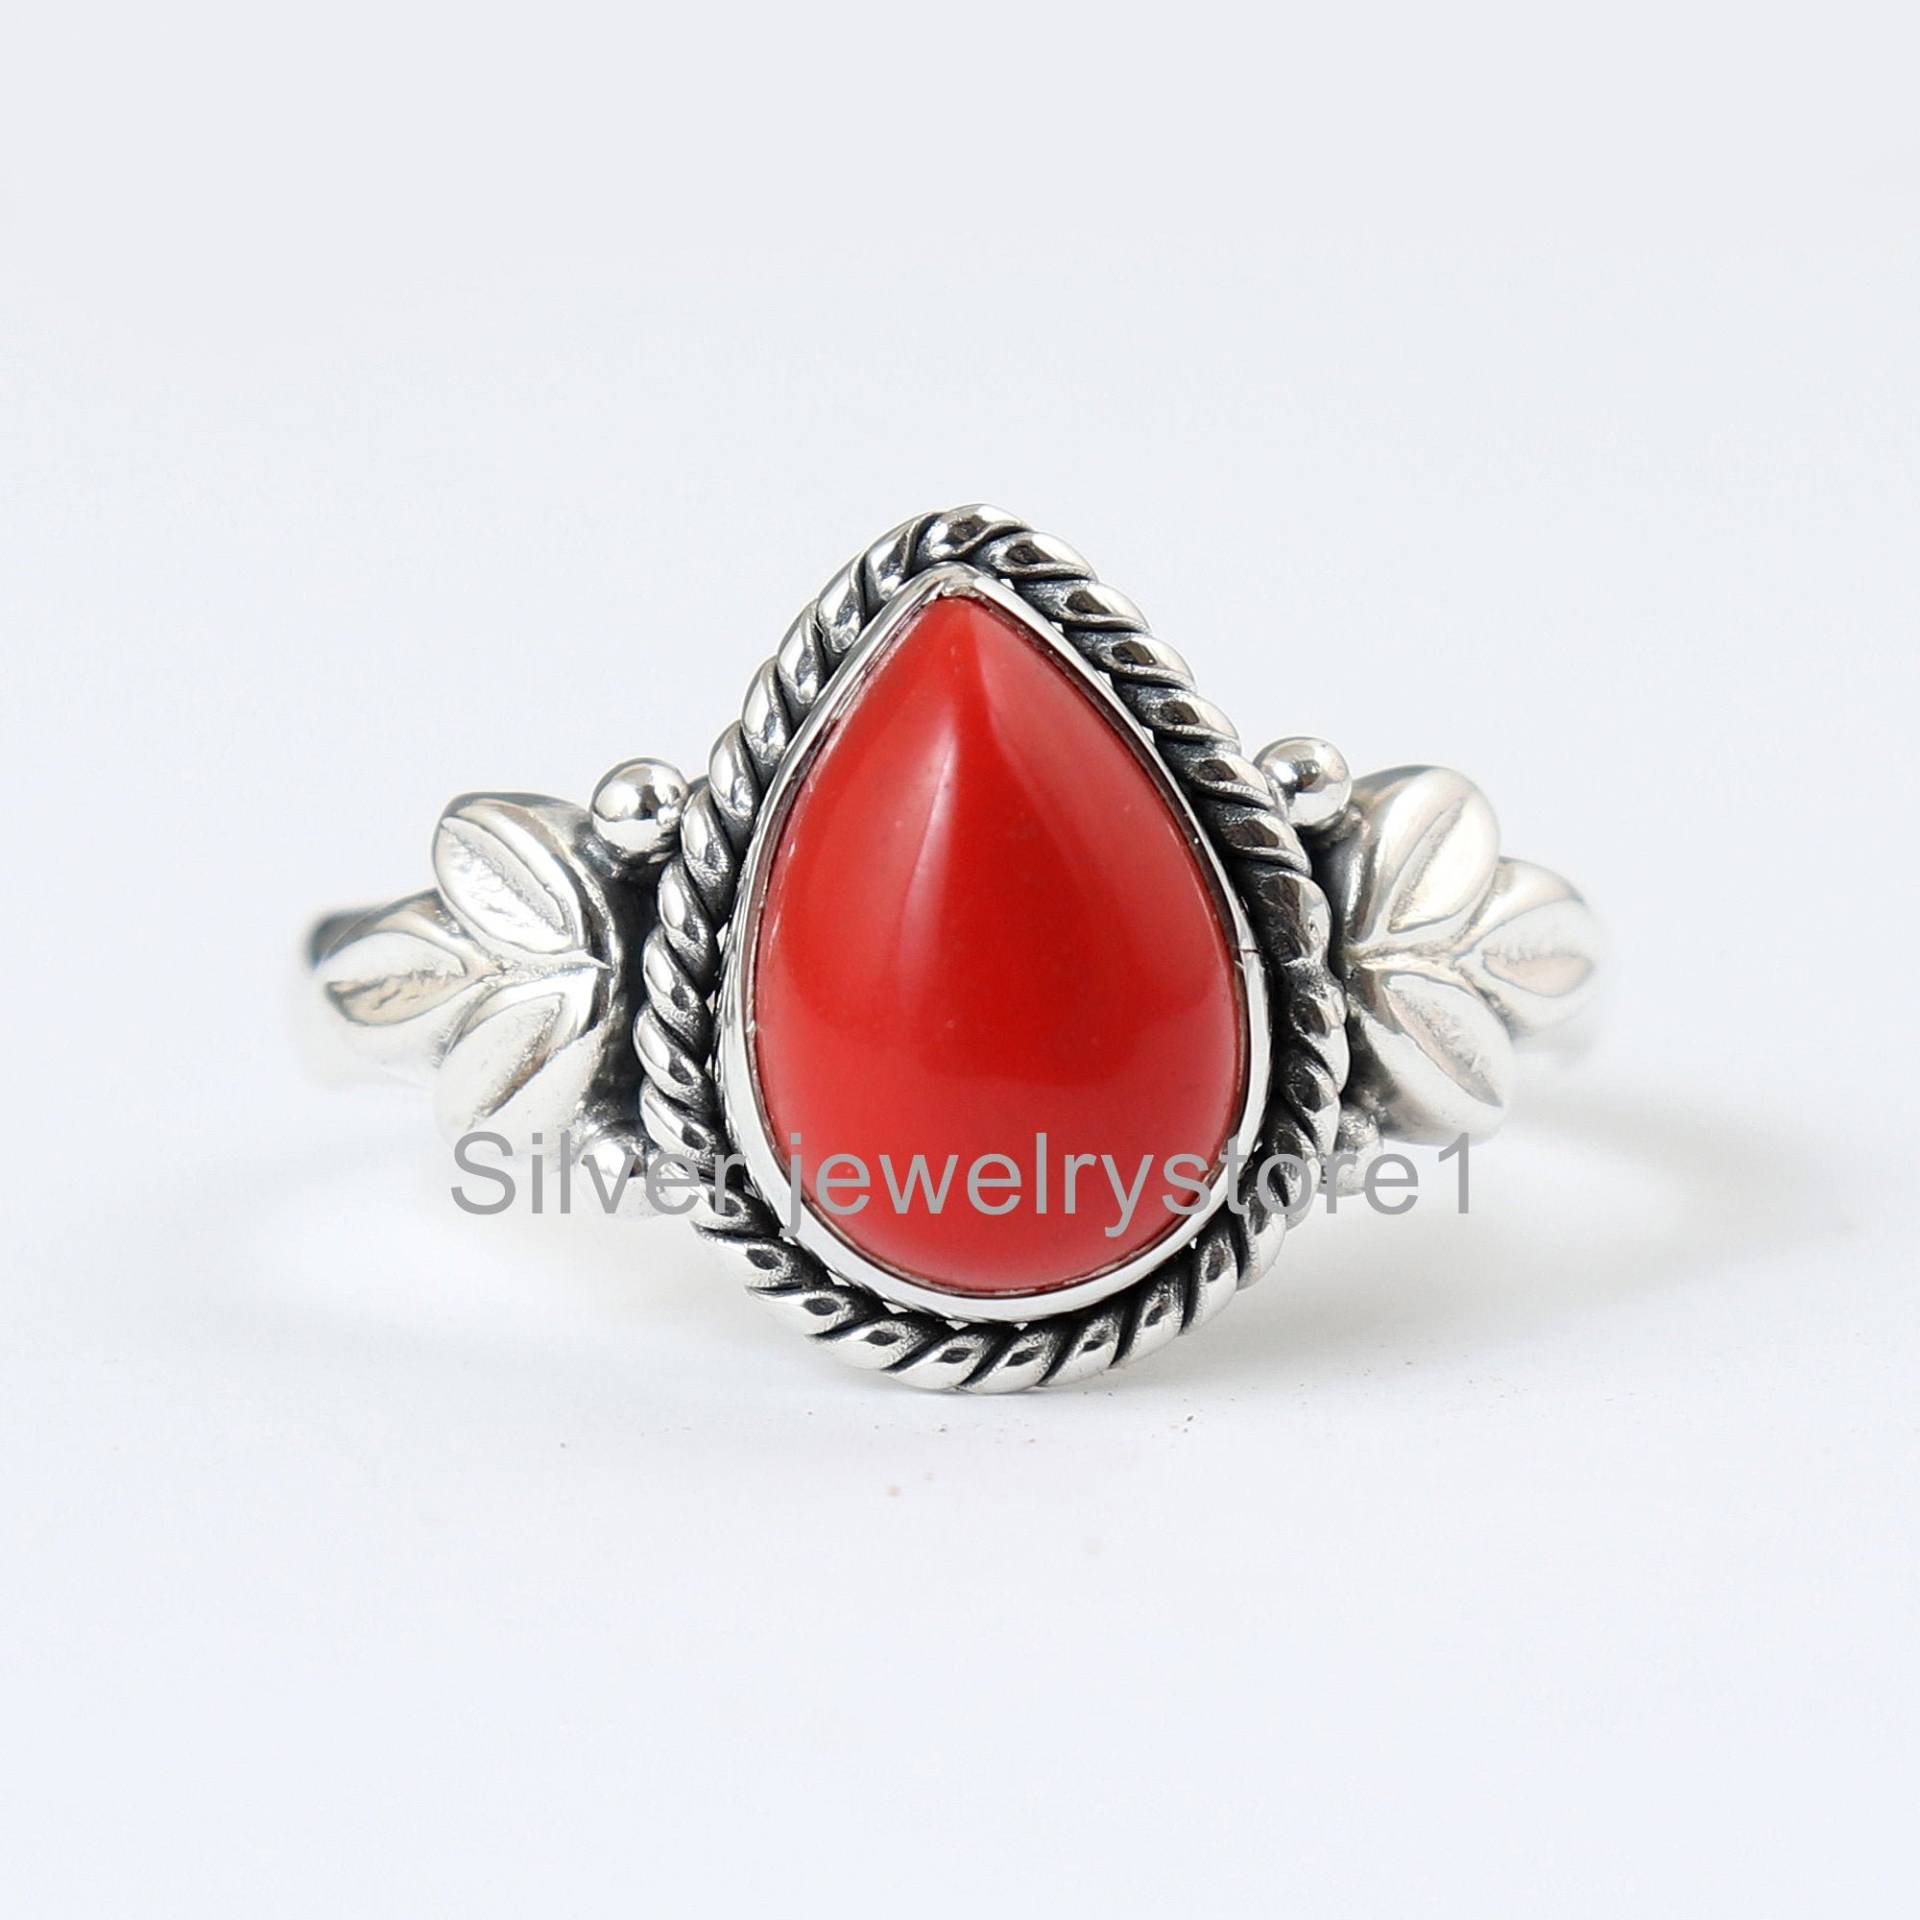 Roter Korallenring, Birnenförmiger Edelsteinring, 925Er Silberring, Roter Korallenschmuck, Handgefertigter Ring, Frauen-Geschenkring von SilverJewelryStore1